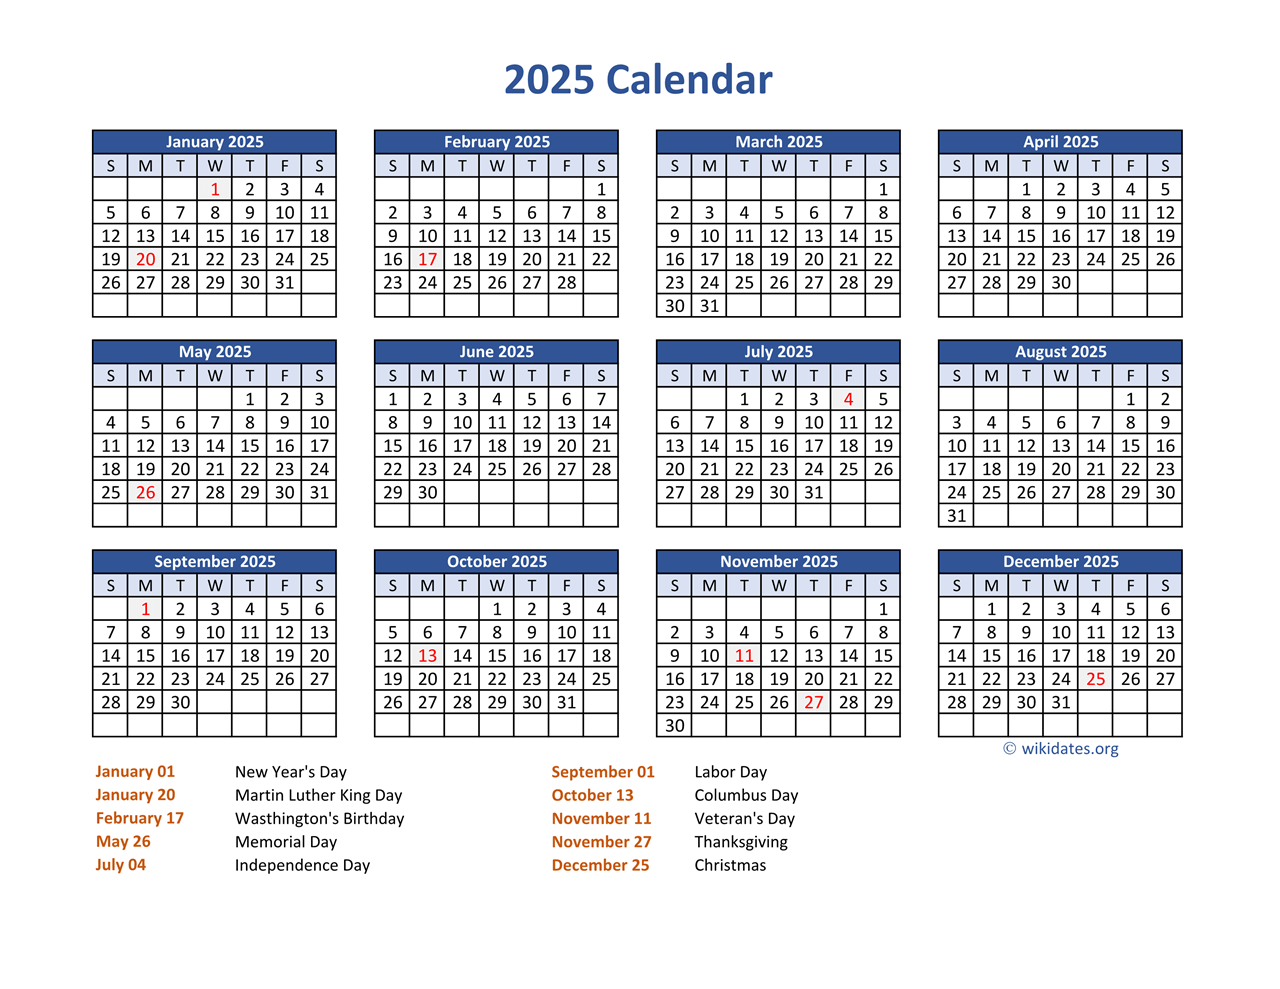 PDF Calendar 2025 with Federal Holidays WikiDates org